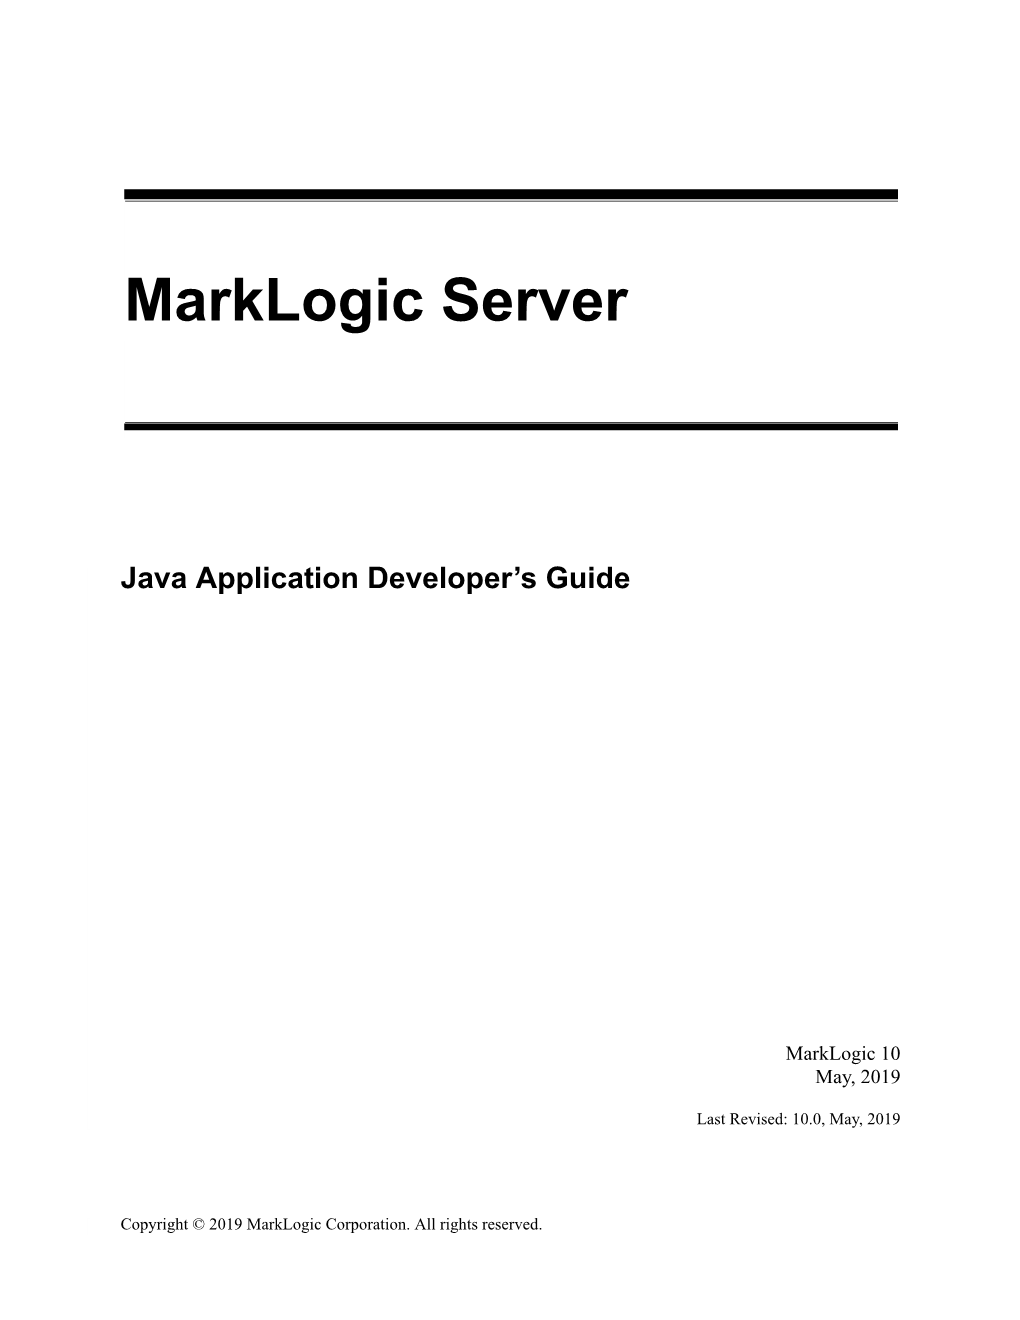 Java Application Developer's Guide (PDF)